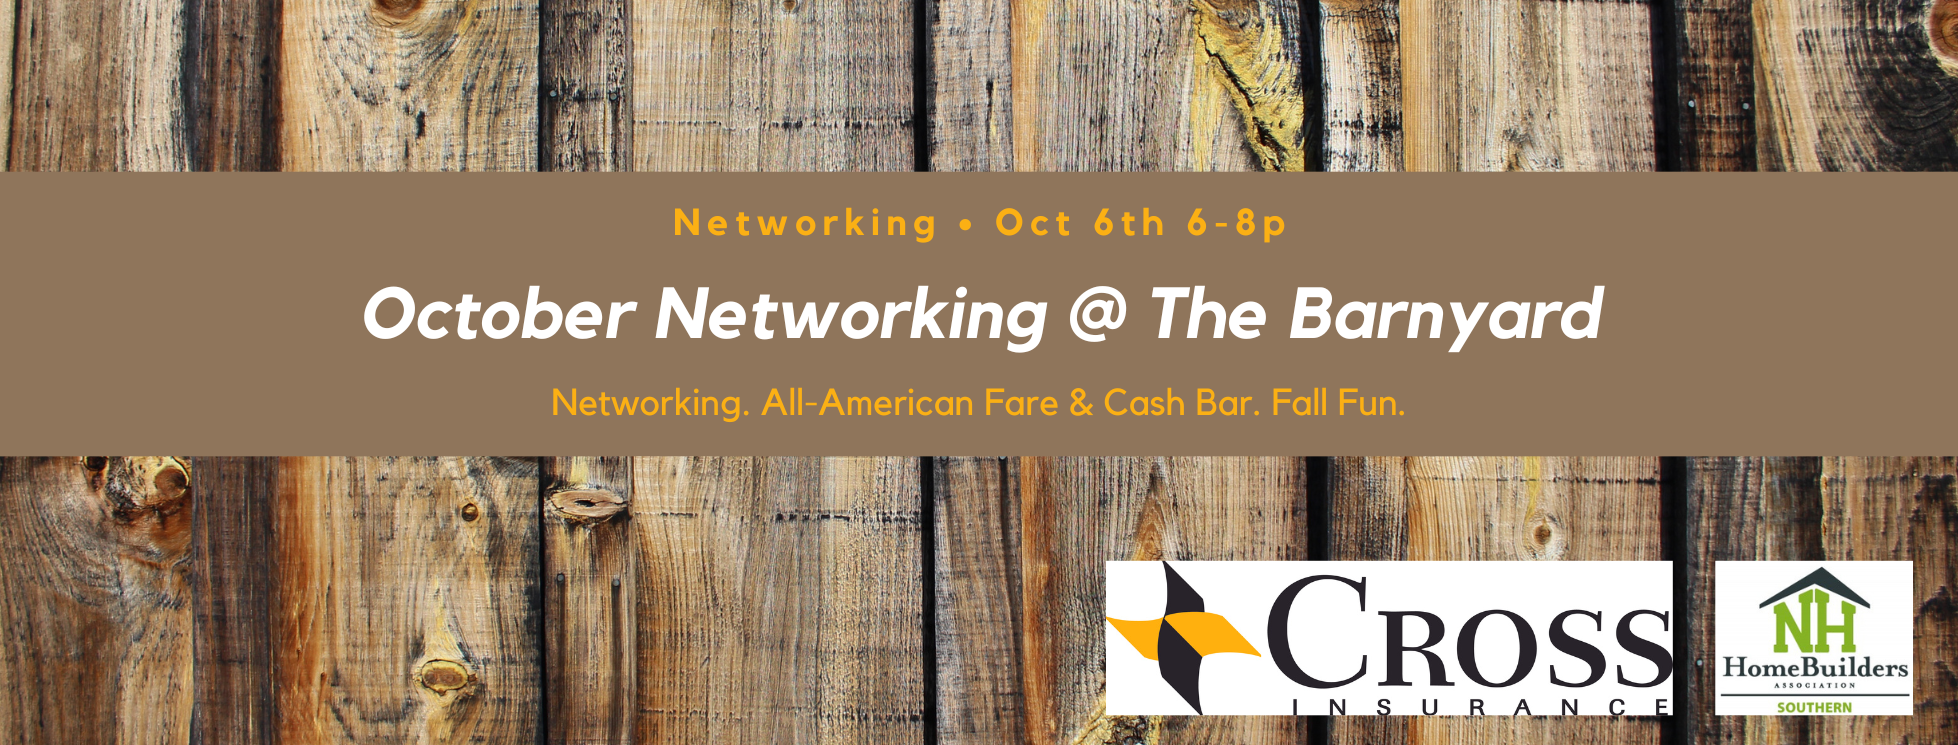 October Networking @ The Barnyard